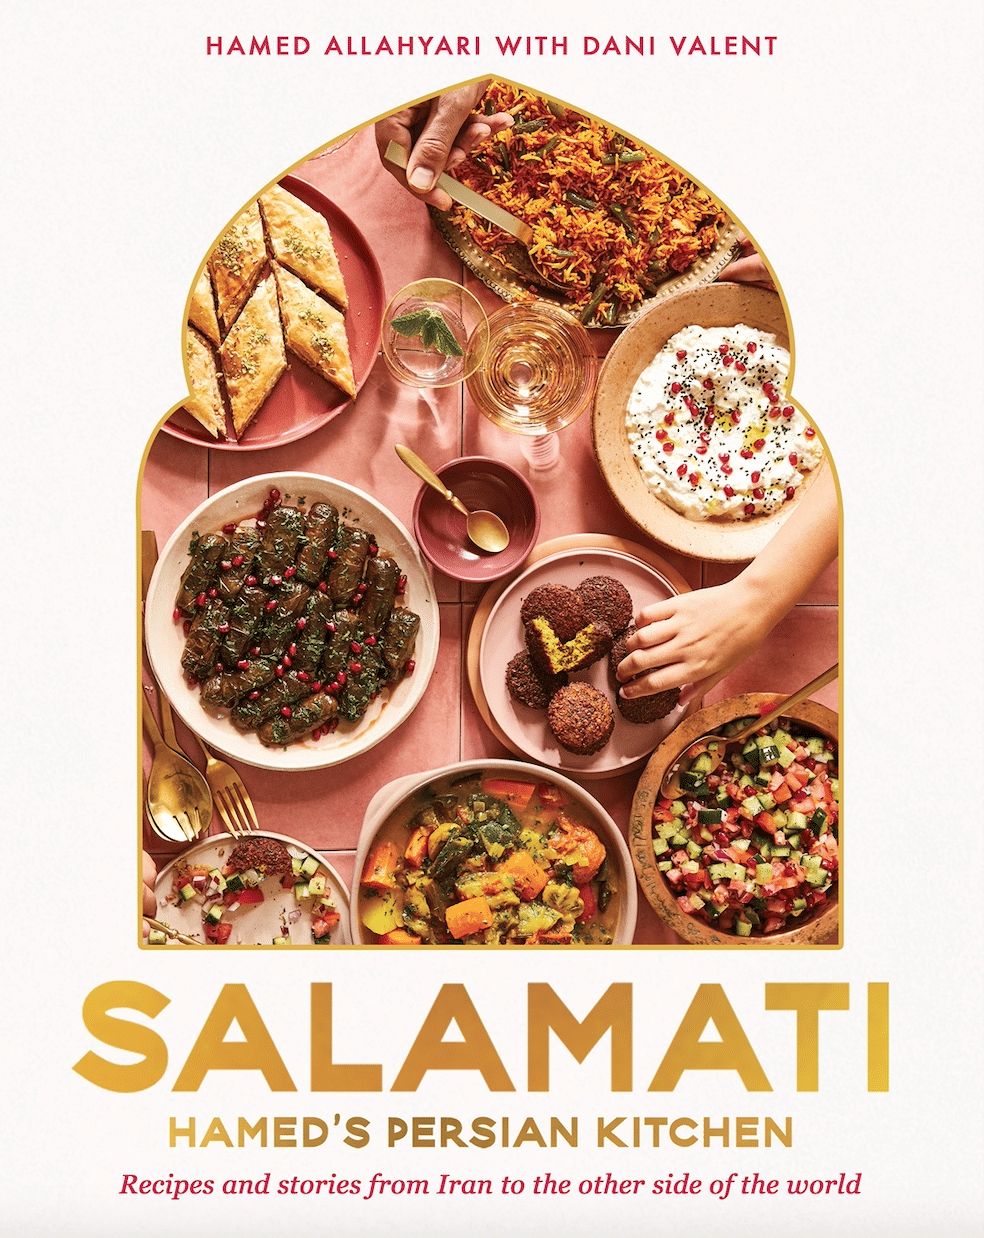 Salamati, February cookbook of the month